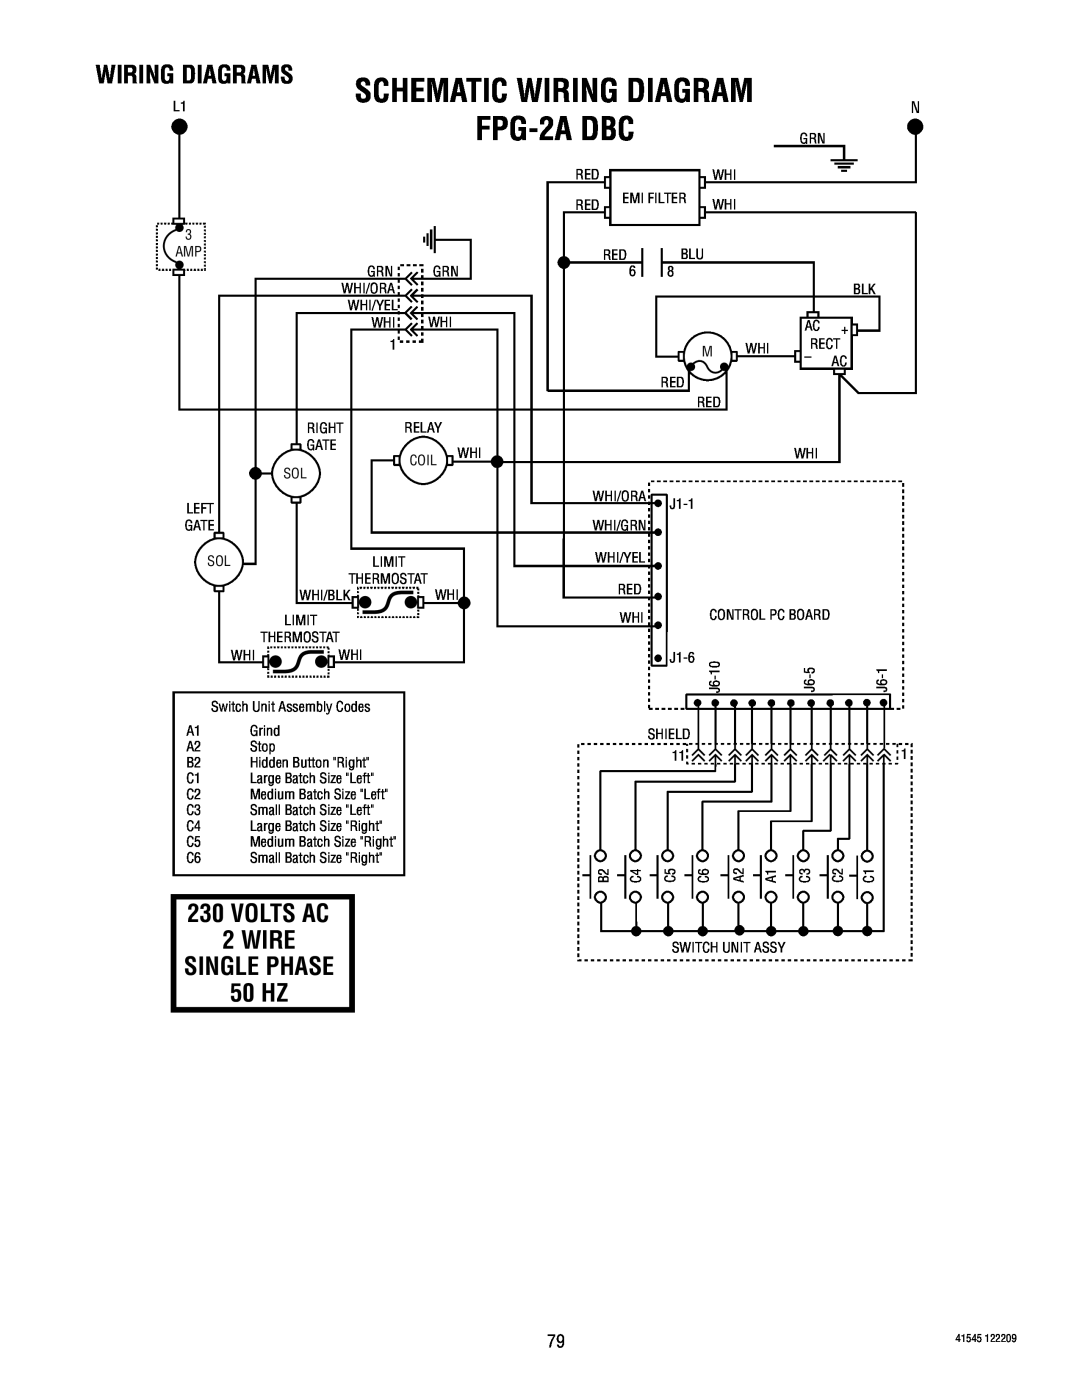 Bunn LPG-2, G9WD, G9-2, G1 FPG-2A DBC, Volts Ac, 50 HZ, Schematic Wiring Diagram, Wiring Diagrams, Wire, Single Phase 